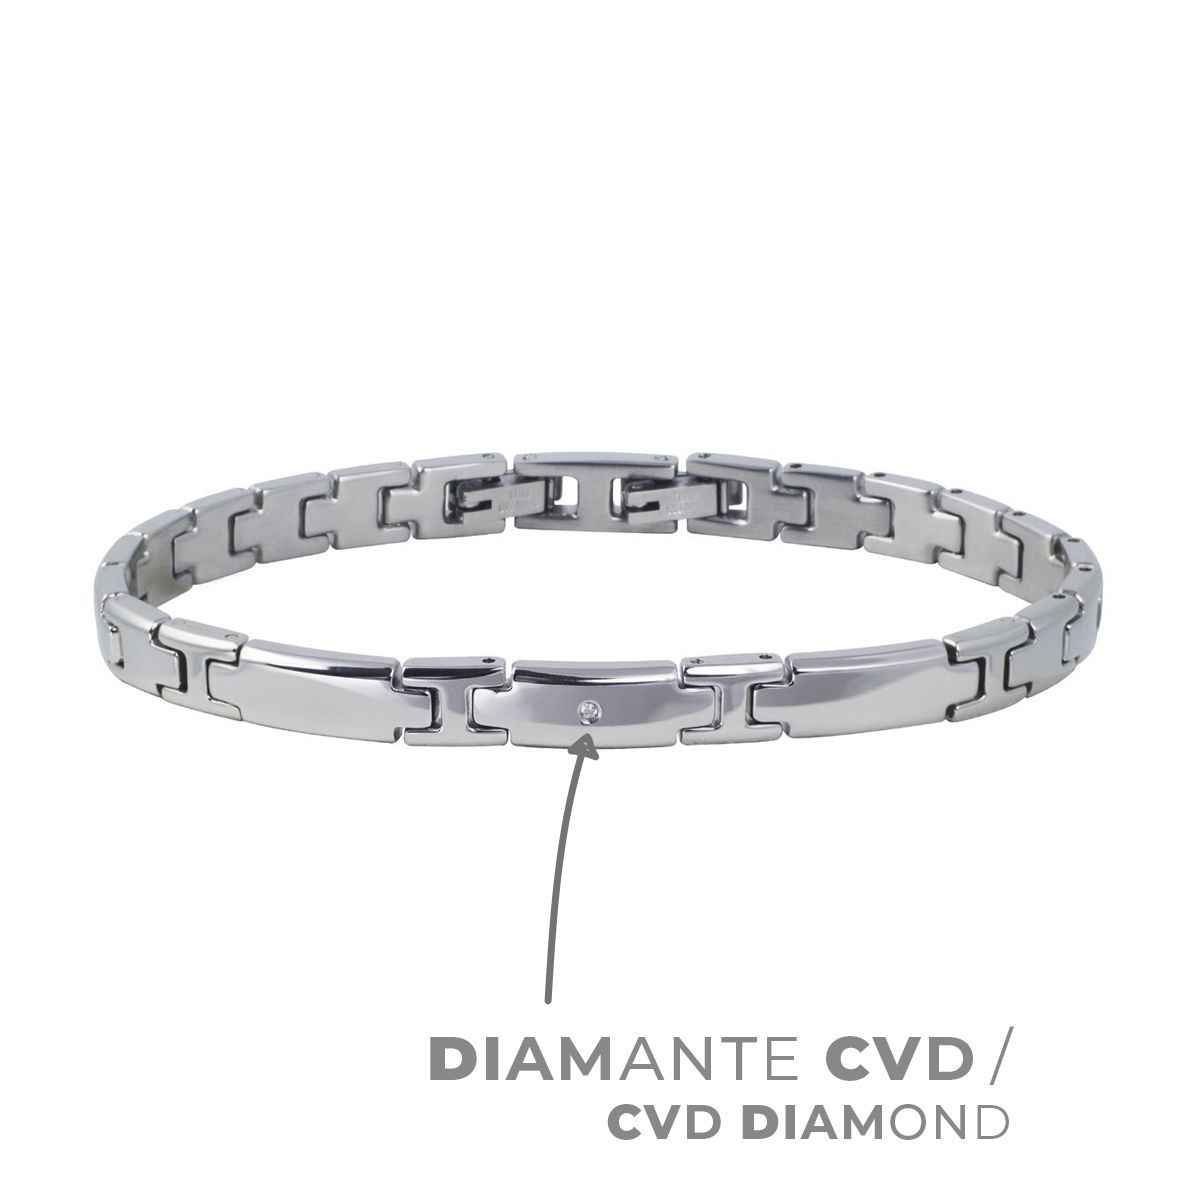 Diamante CVD - CVD Diamond